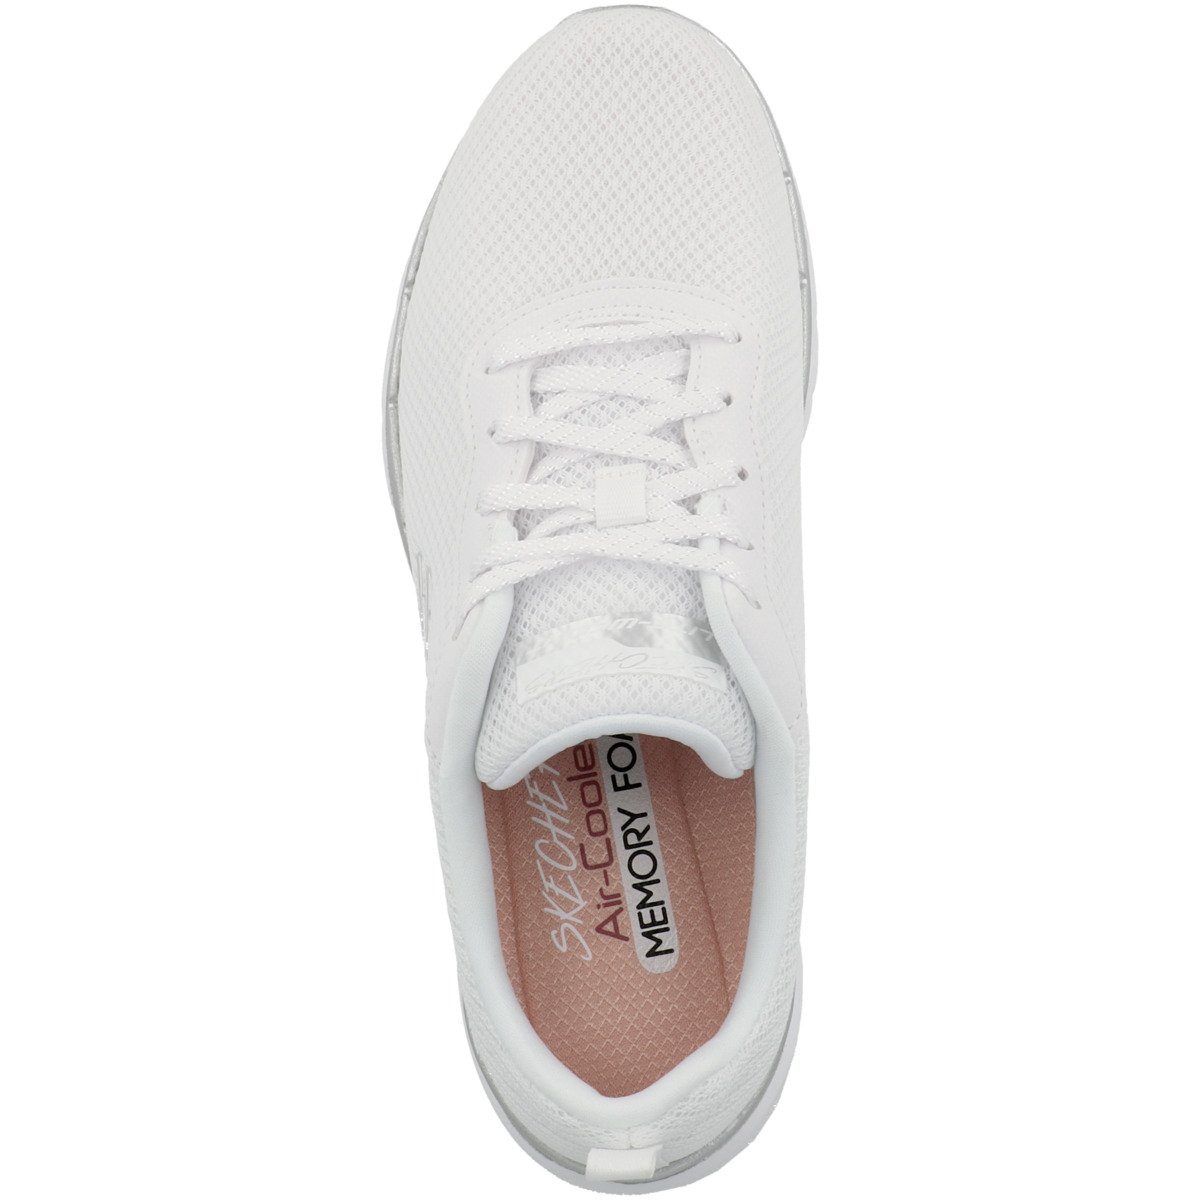 First weiss - 3.0 Damen Appeal Sneaker Insight Flex Skechers